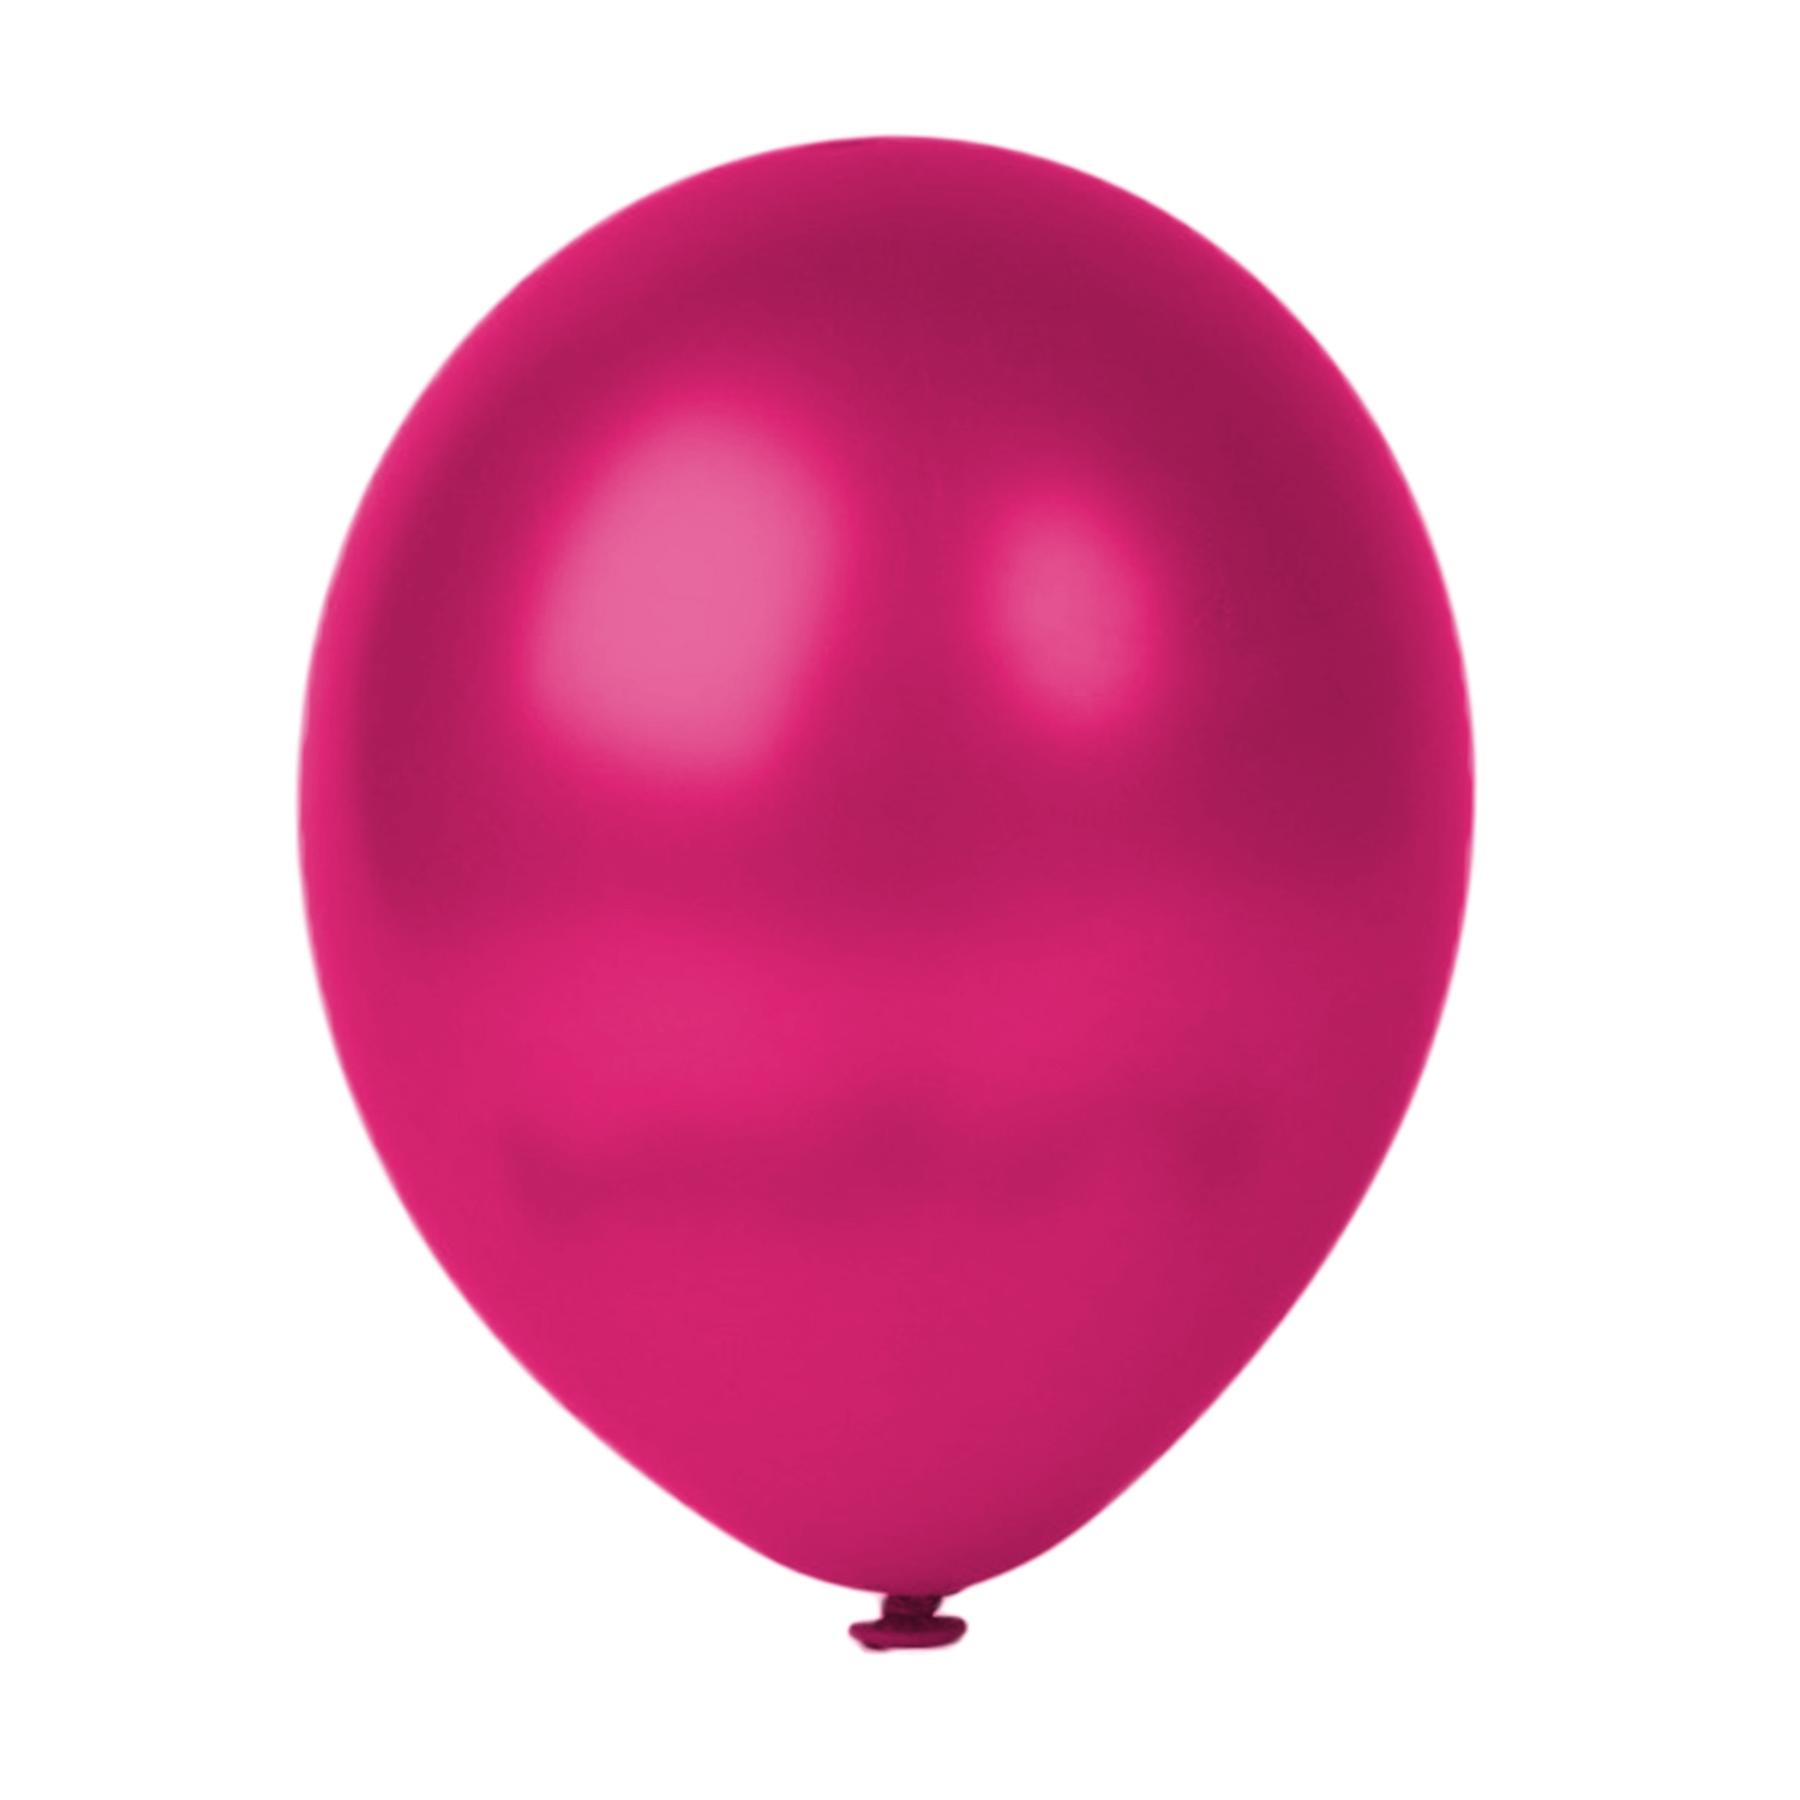 100er SET - Latex Luftballon - 12inch - Pink - Metallic (glänzend)